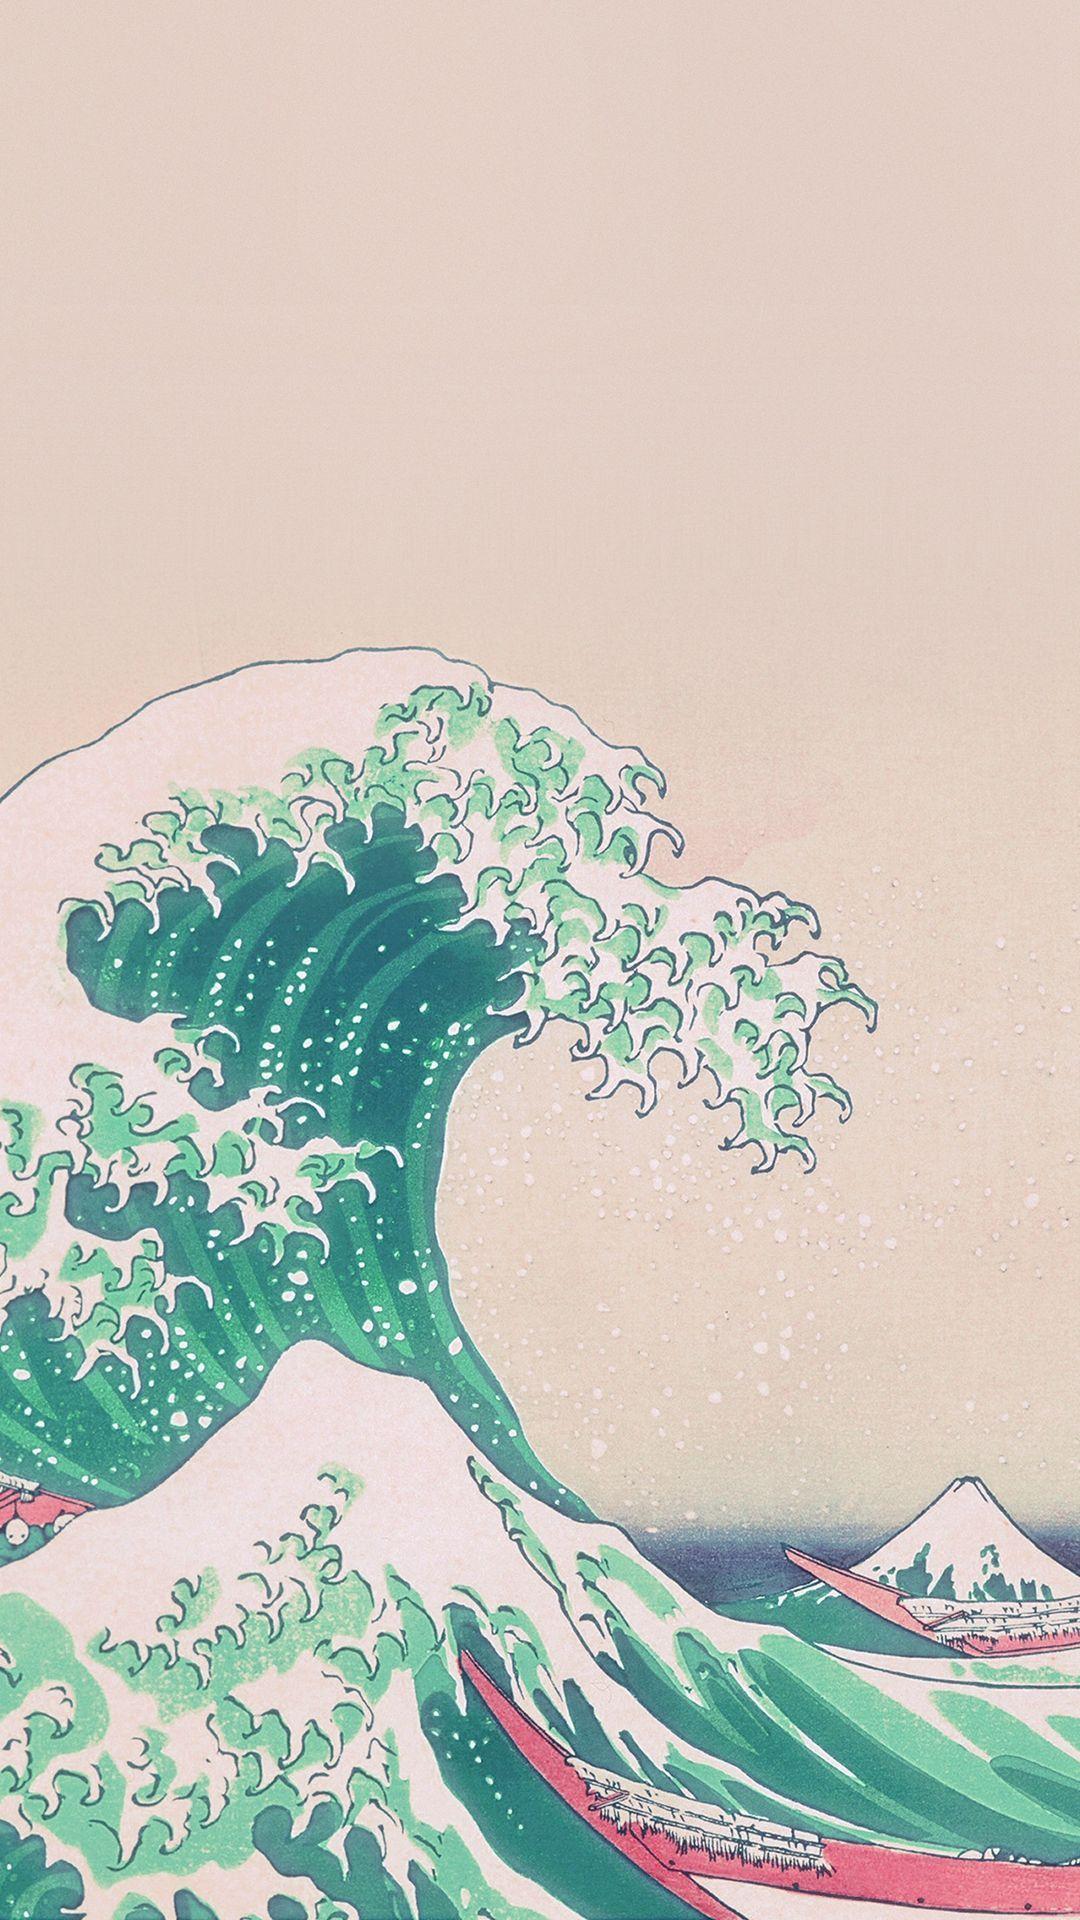 Wave Art Japanese Green Illust Classic iPhone 6 Wallpaper Download. iPhone Wallpaper, iPad wallpa. Aesthetic iphone wallpaper, Tumblr wallpaper, Waves wallpaper